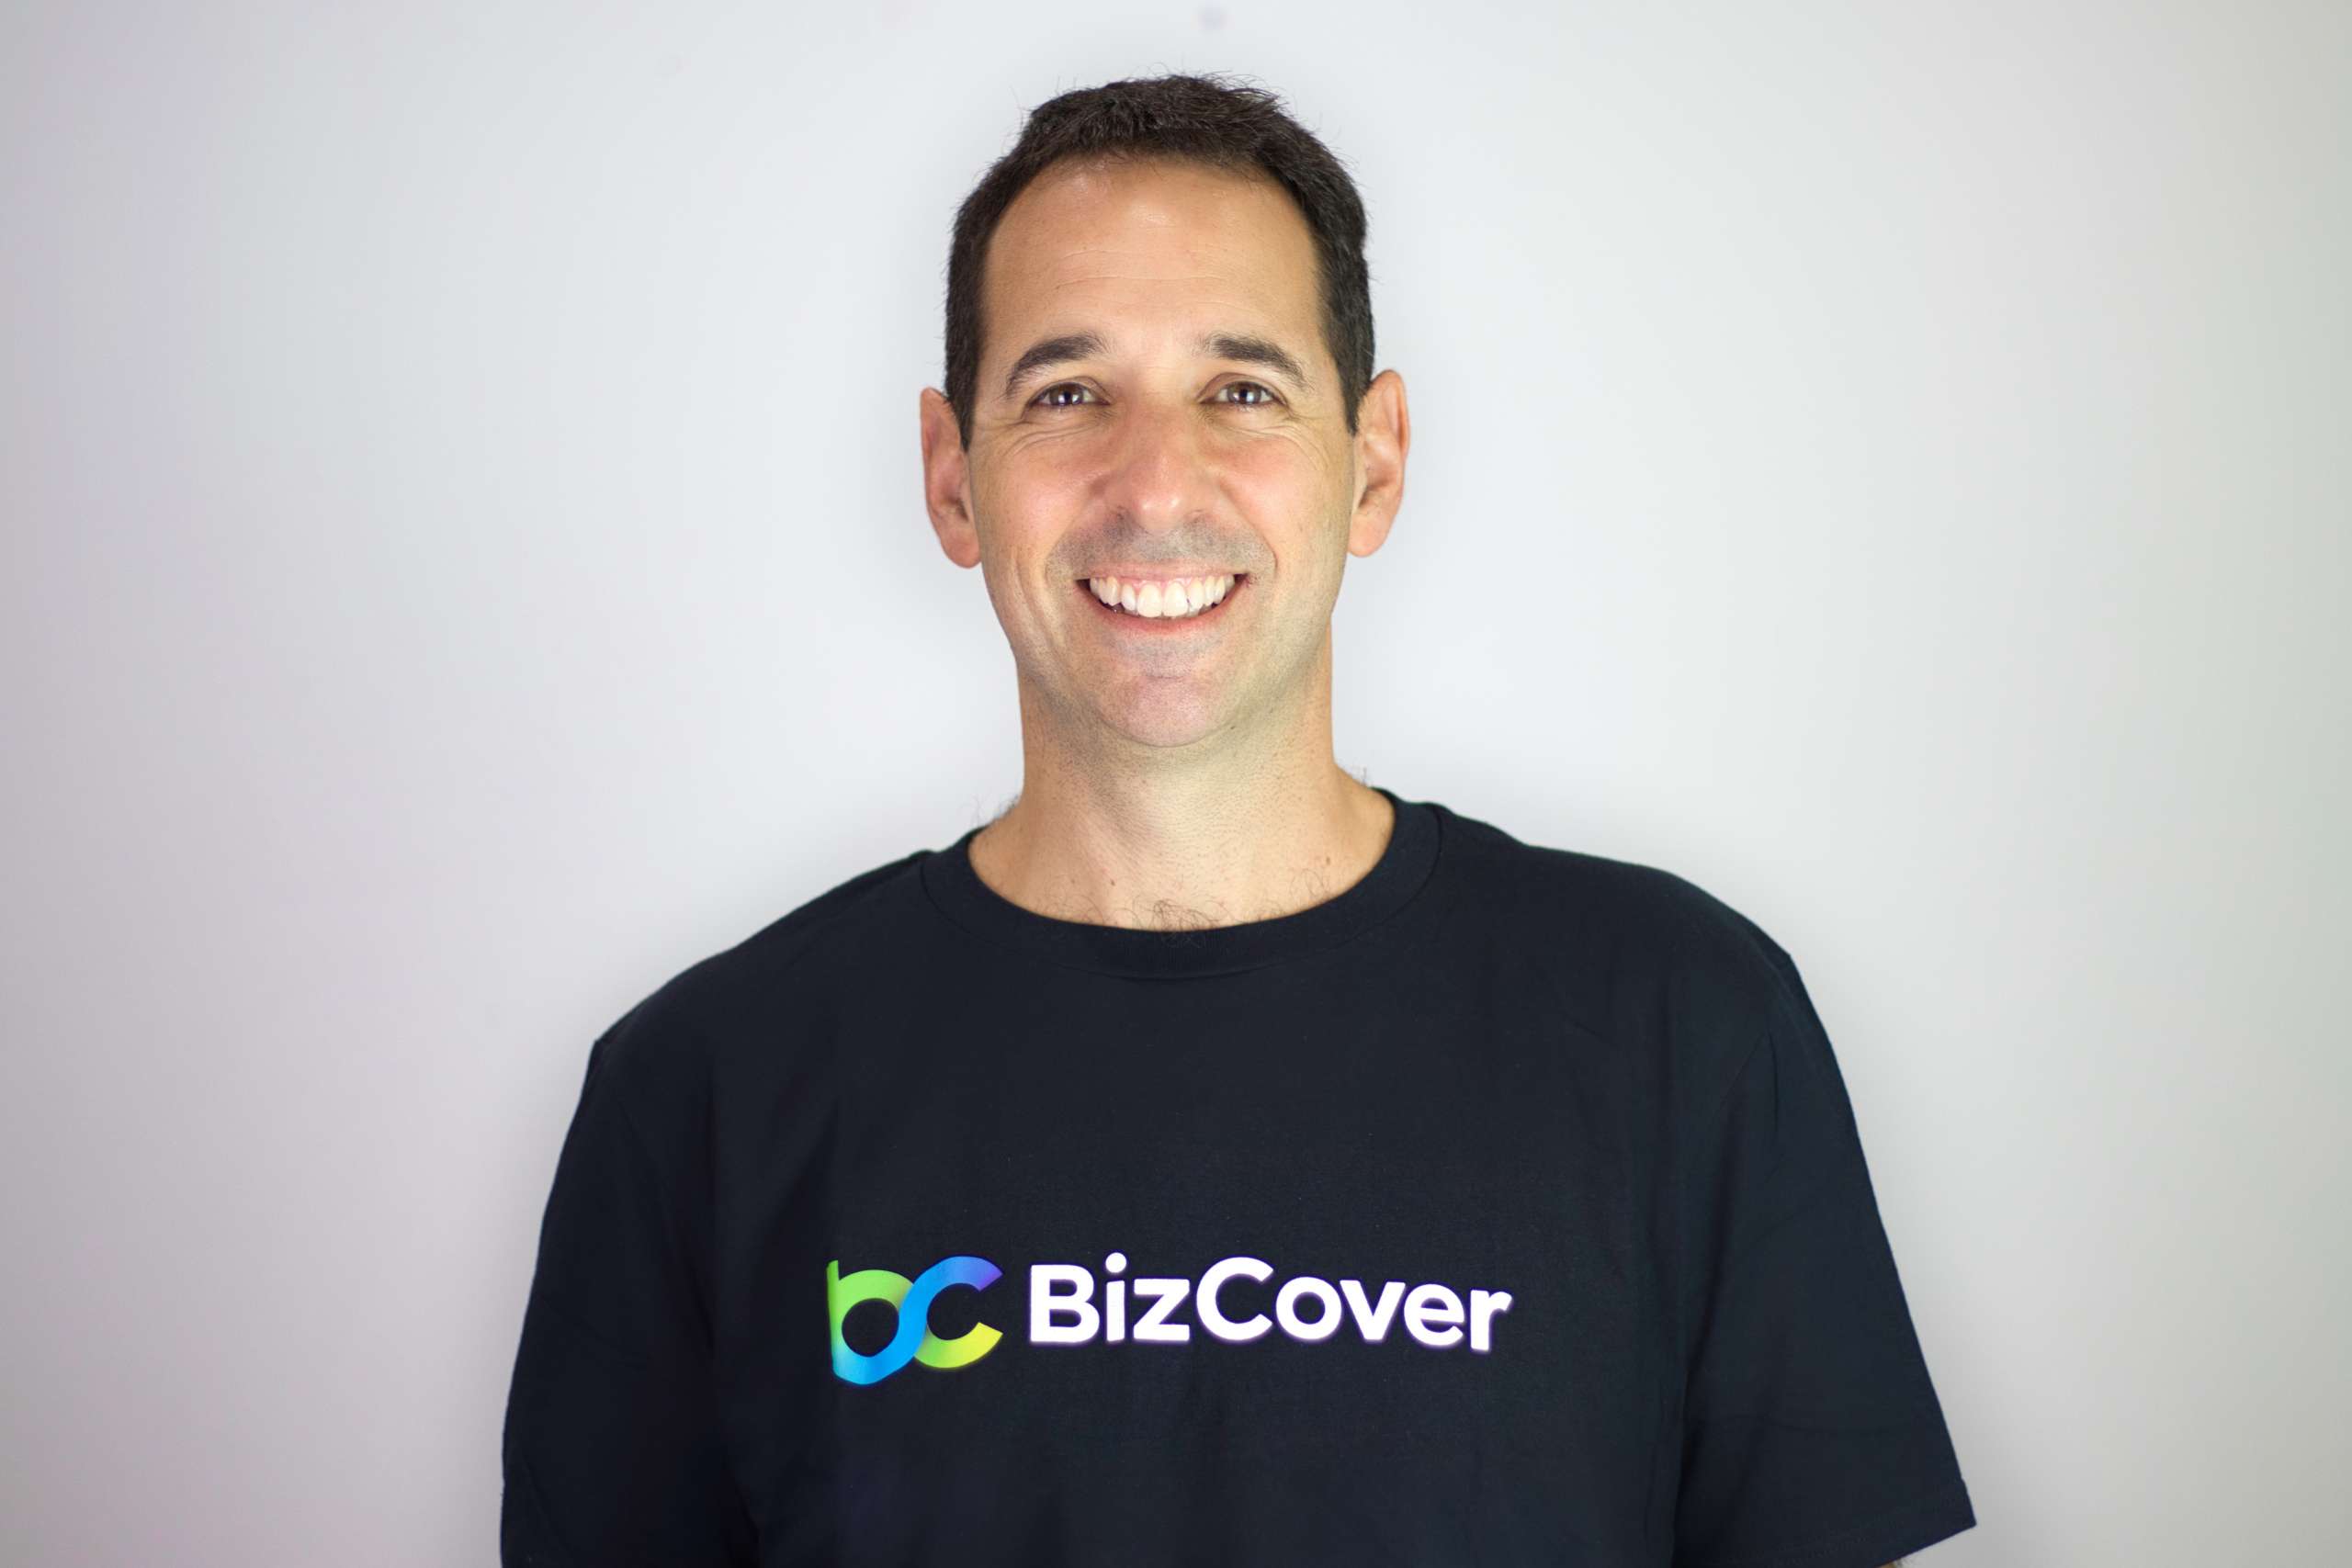 Smiling Michael Gottlieb wearing BizCover shirt